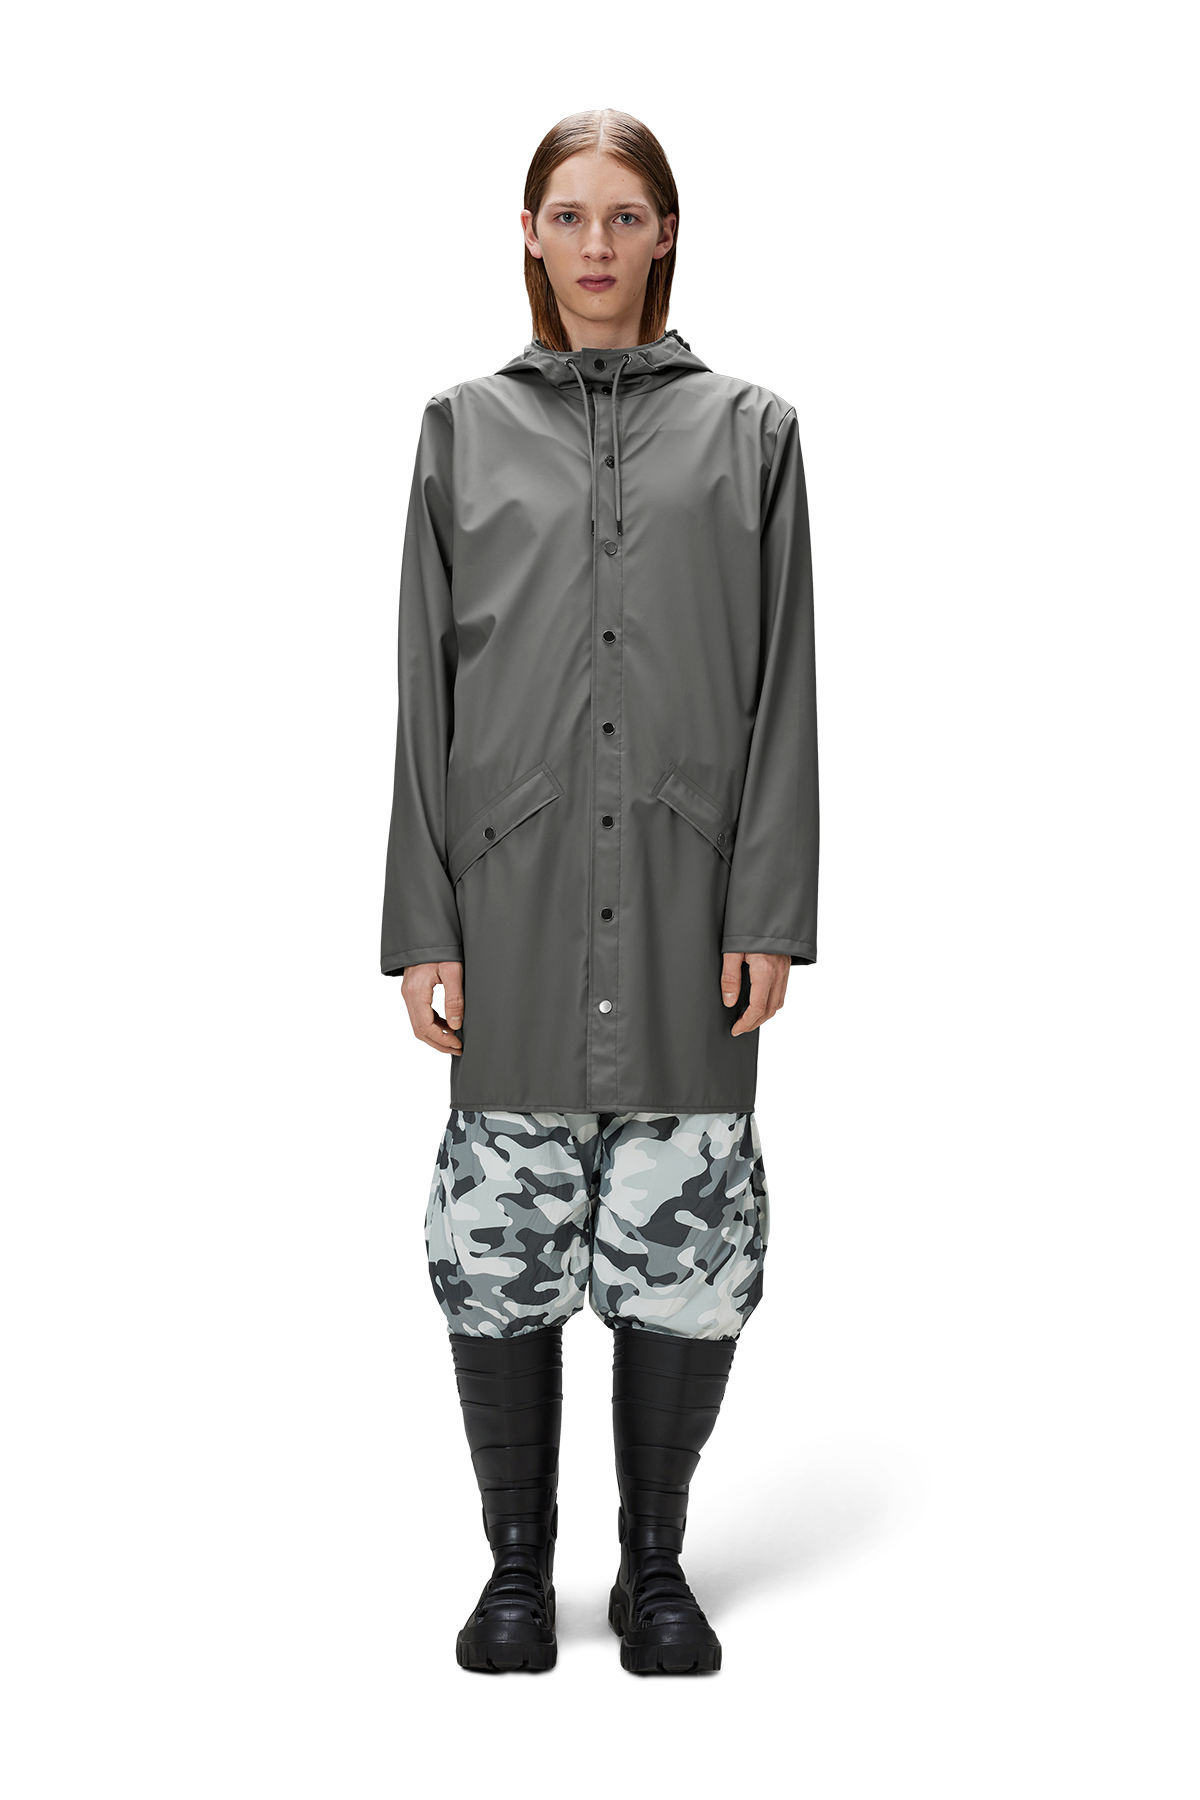 Rains 12020 Long Jacket Grey